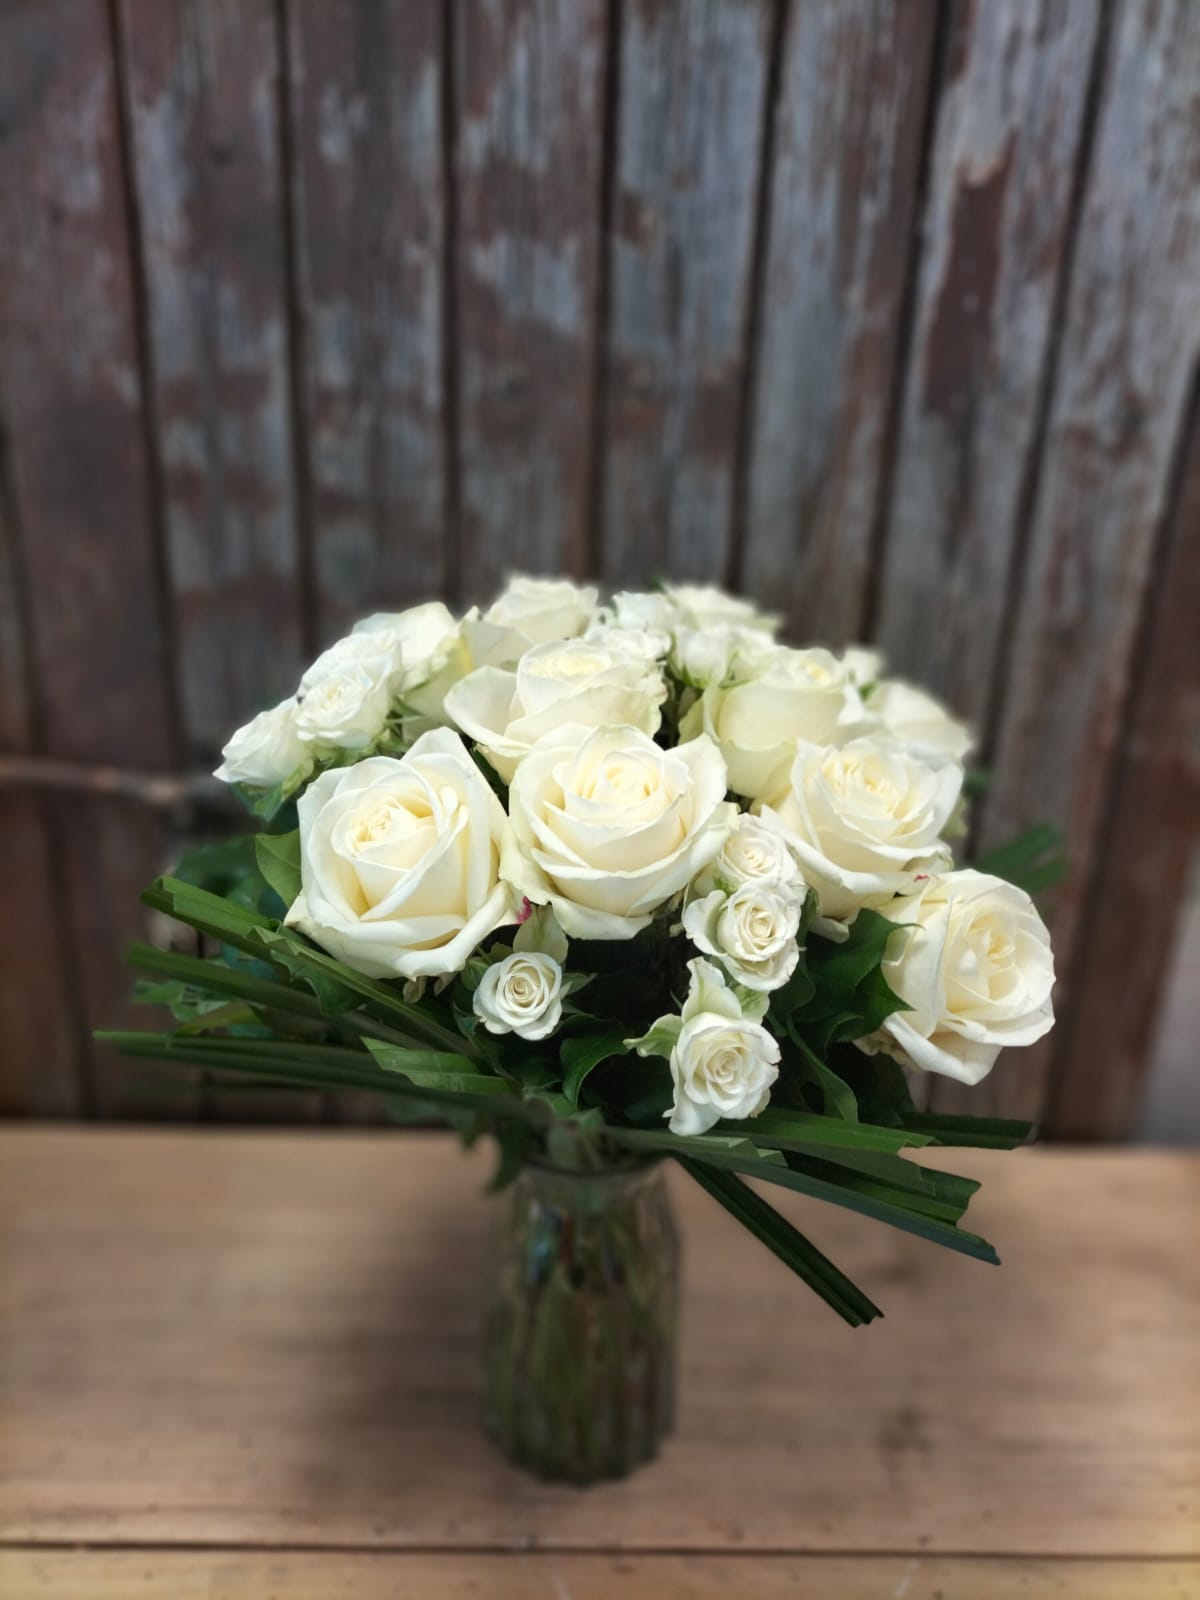 bouquet olympe fleurs blanches touchard le mans